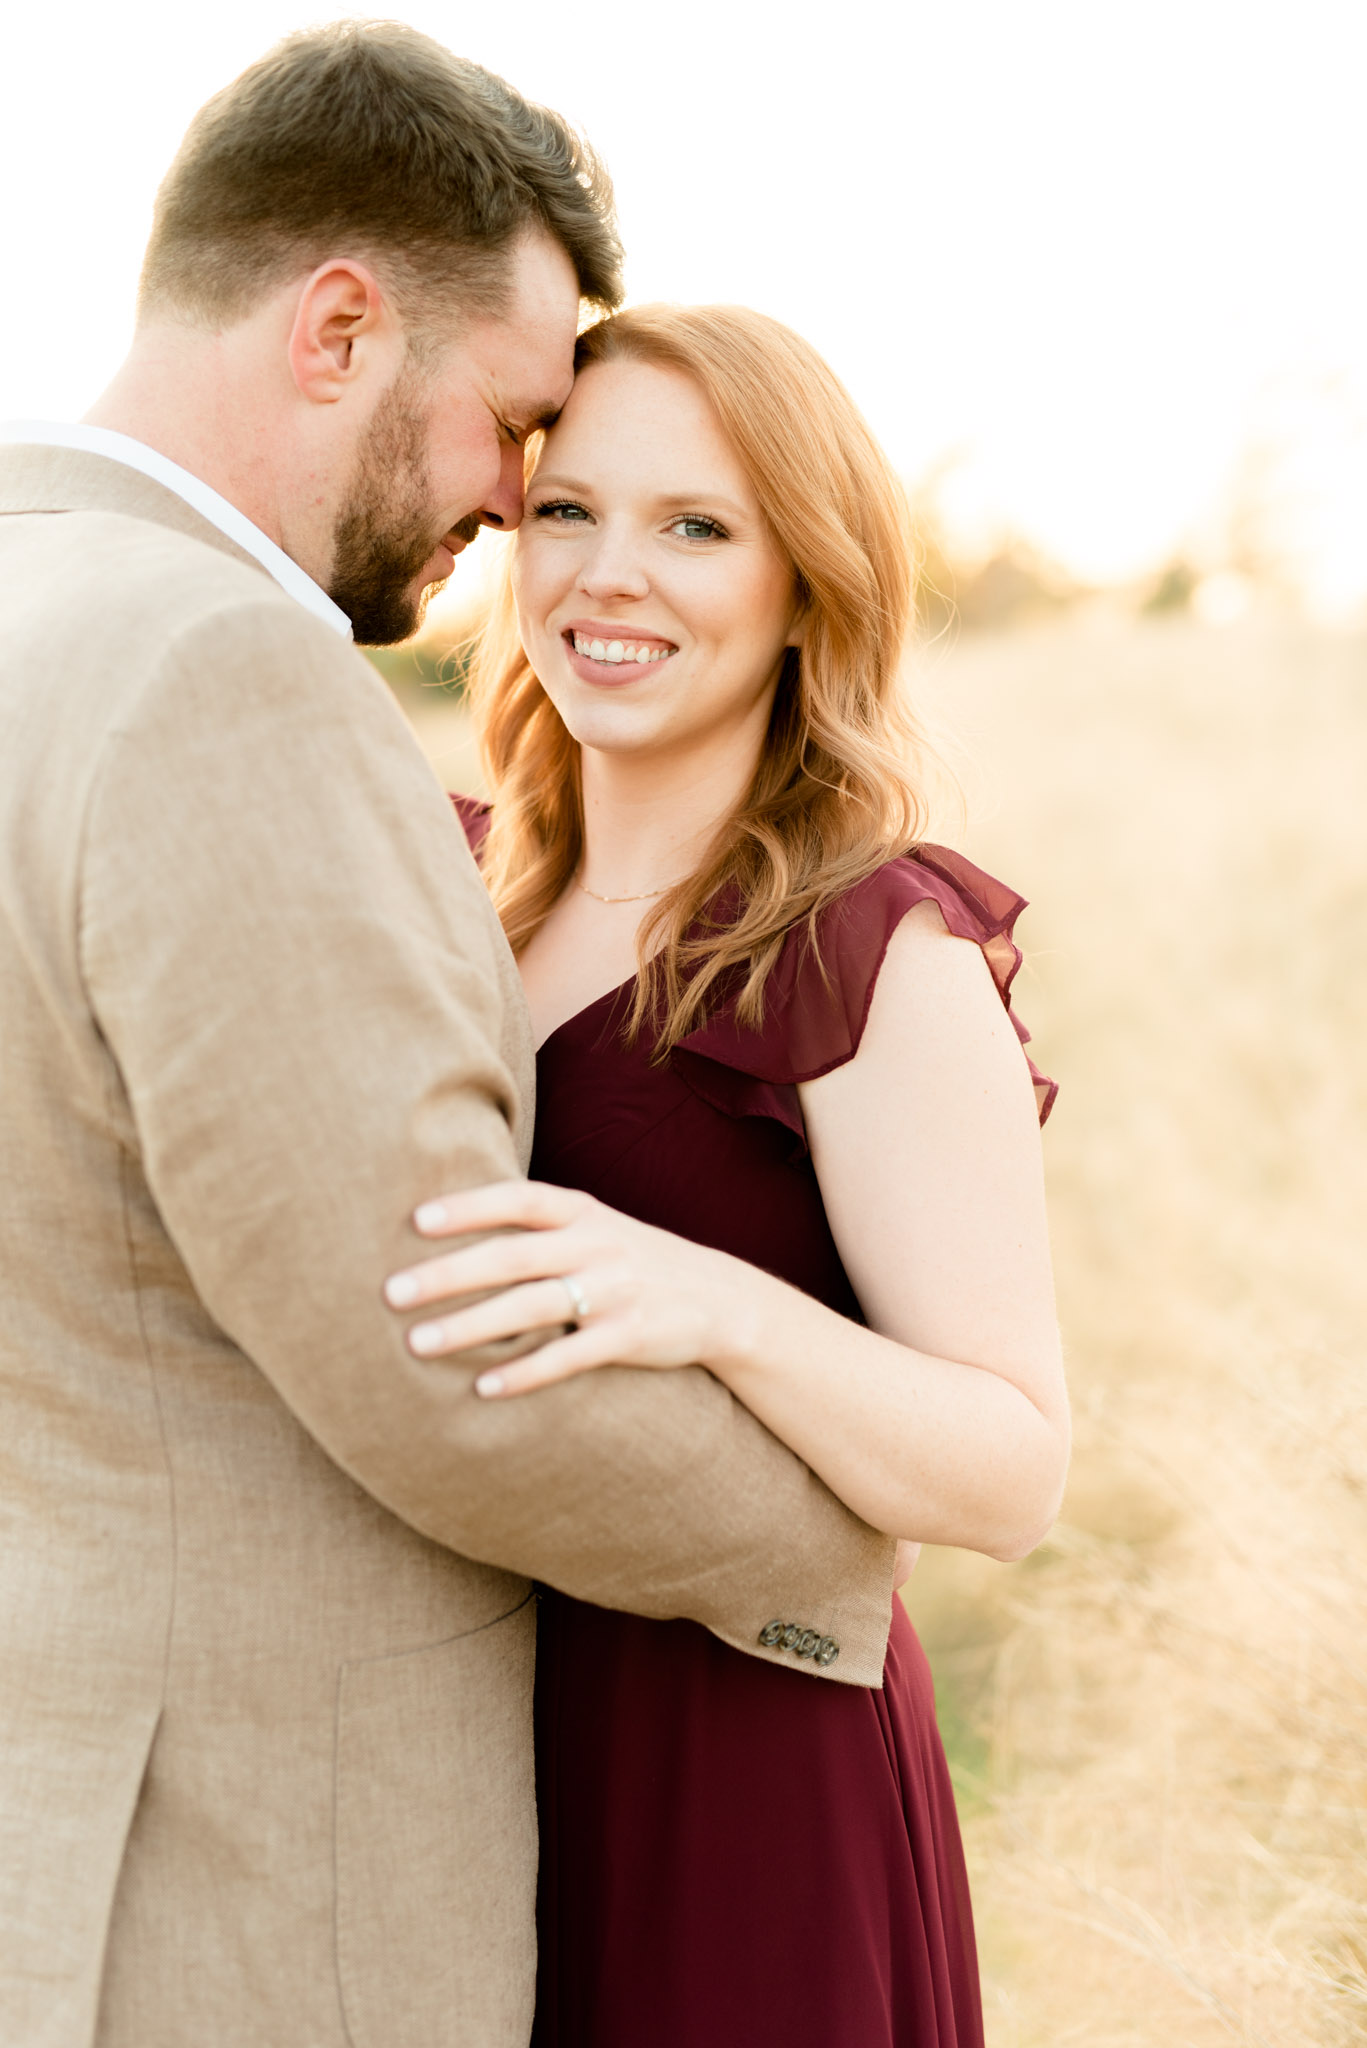 Woman smiles at camera while snuggling husband.